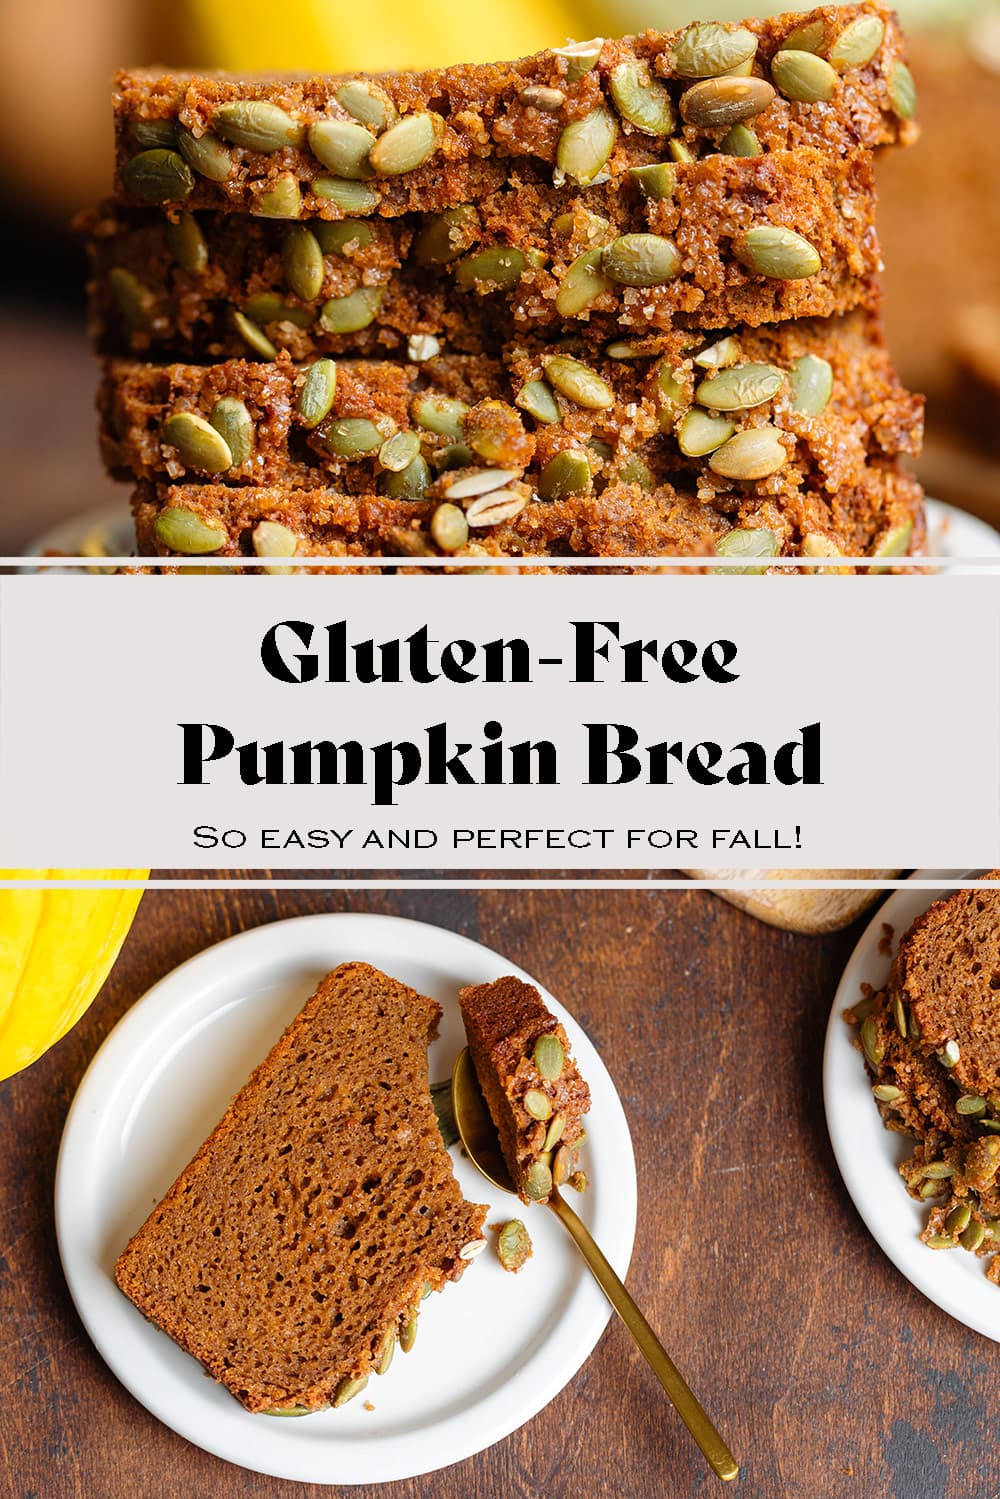 Gluten-Free Pumpkin Bread